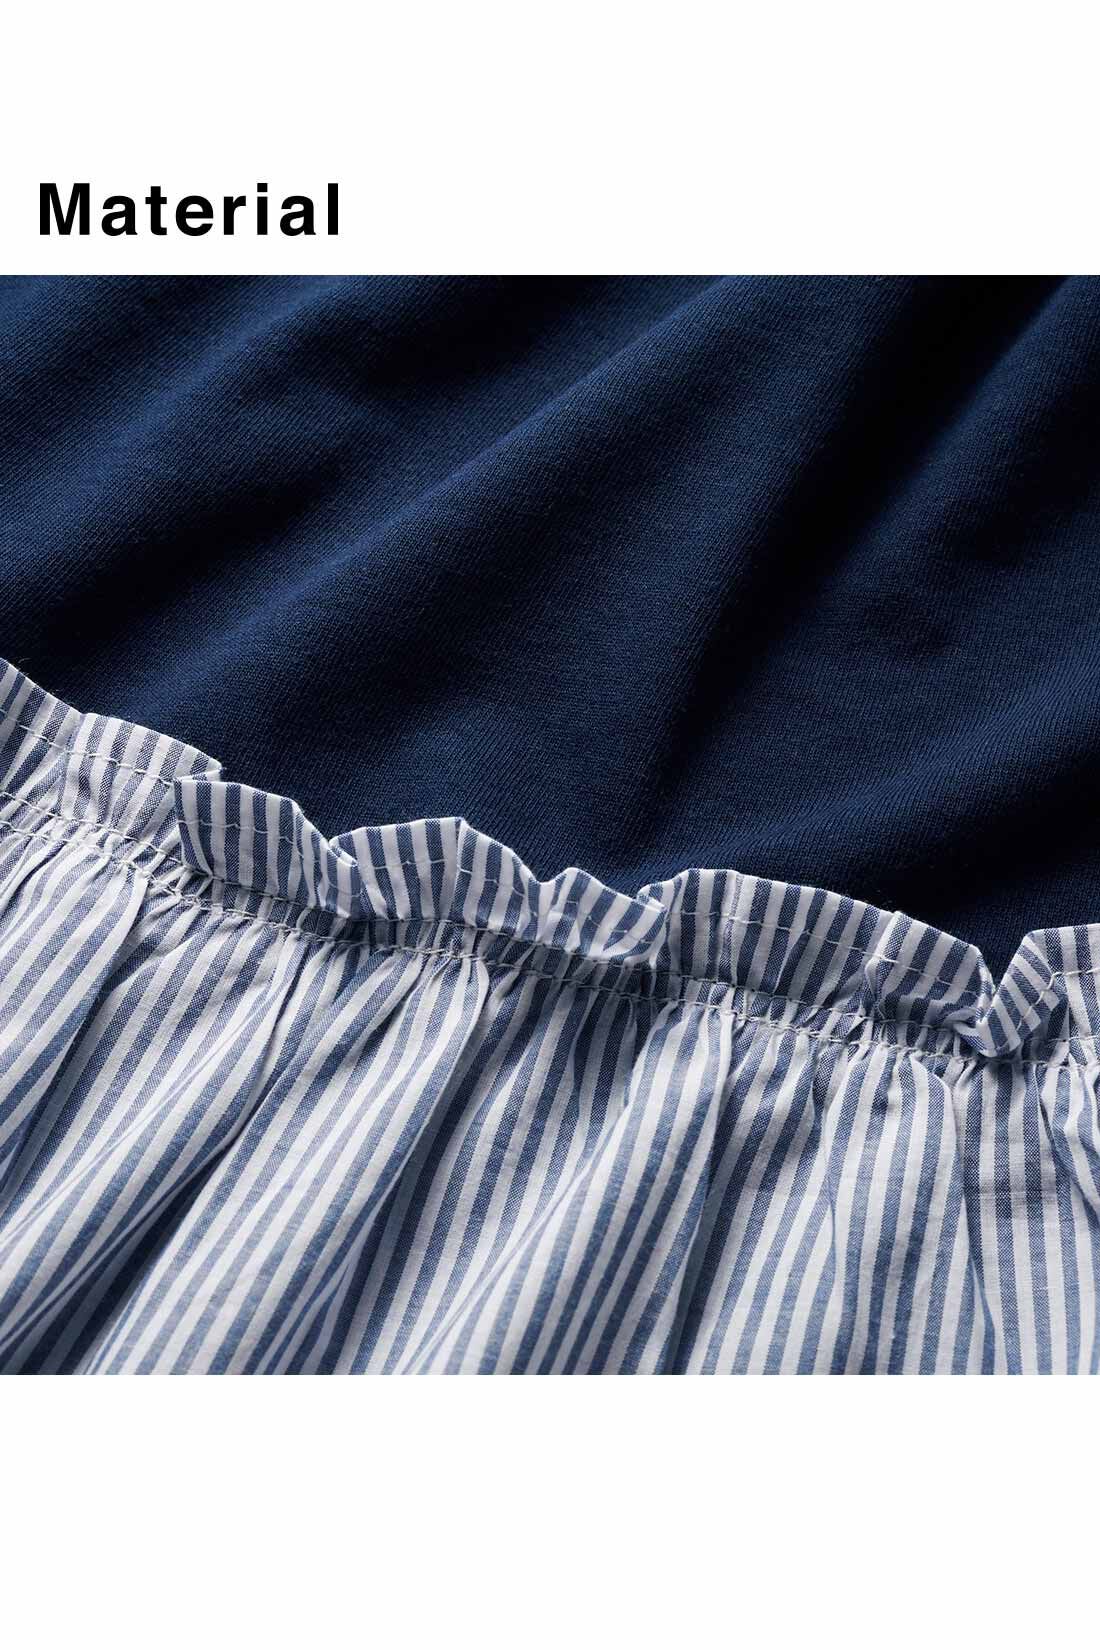 IEDIT|IEDIT[イディット]　異素材ストライプ遣いのボリューム袖トップス〈ブラック〉|カットソー×布はくの組み合わせでメリハリを。素材はともに綿100％。